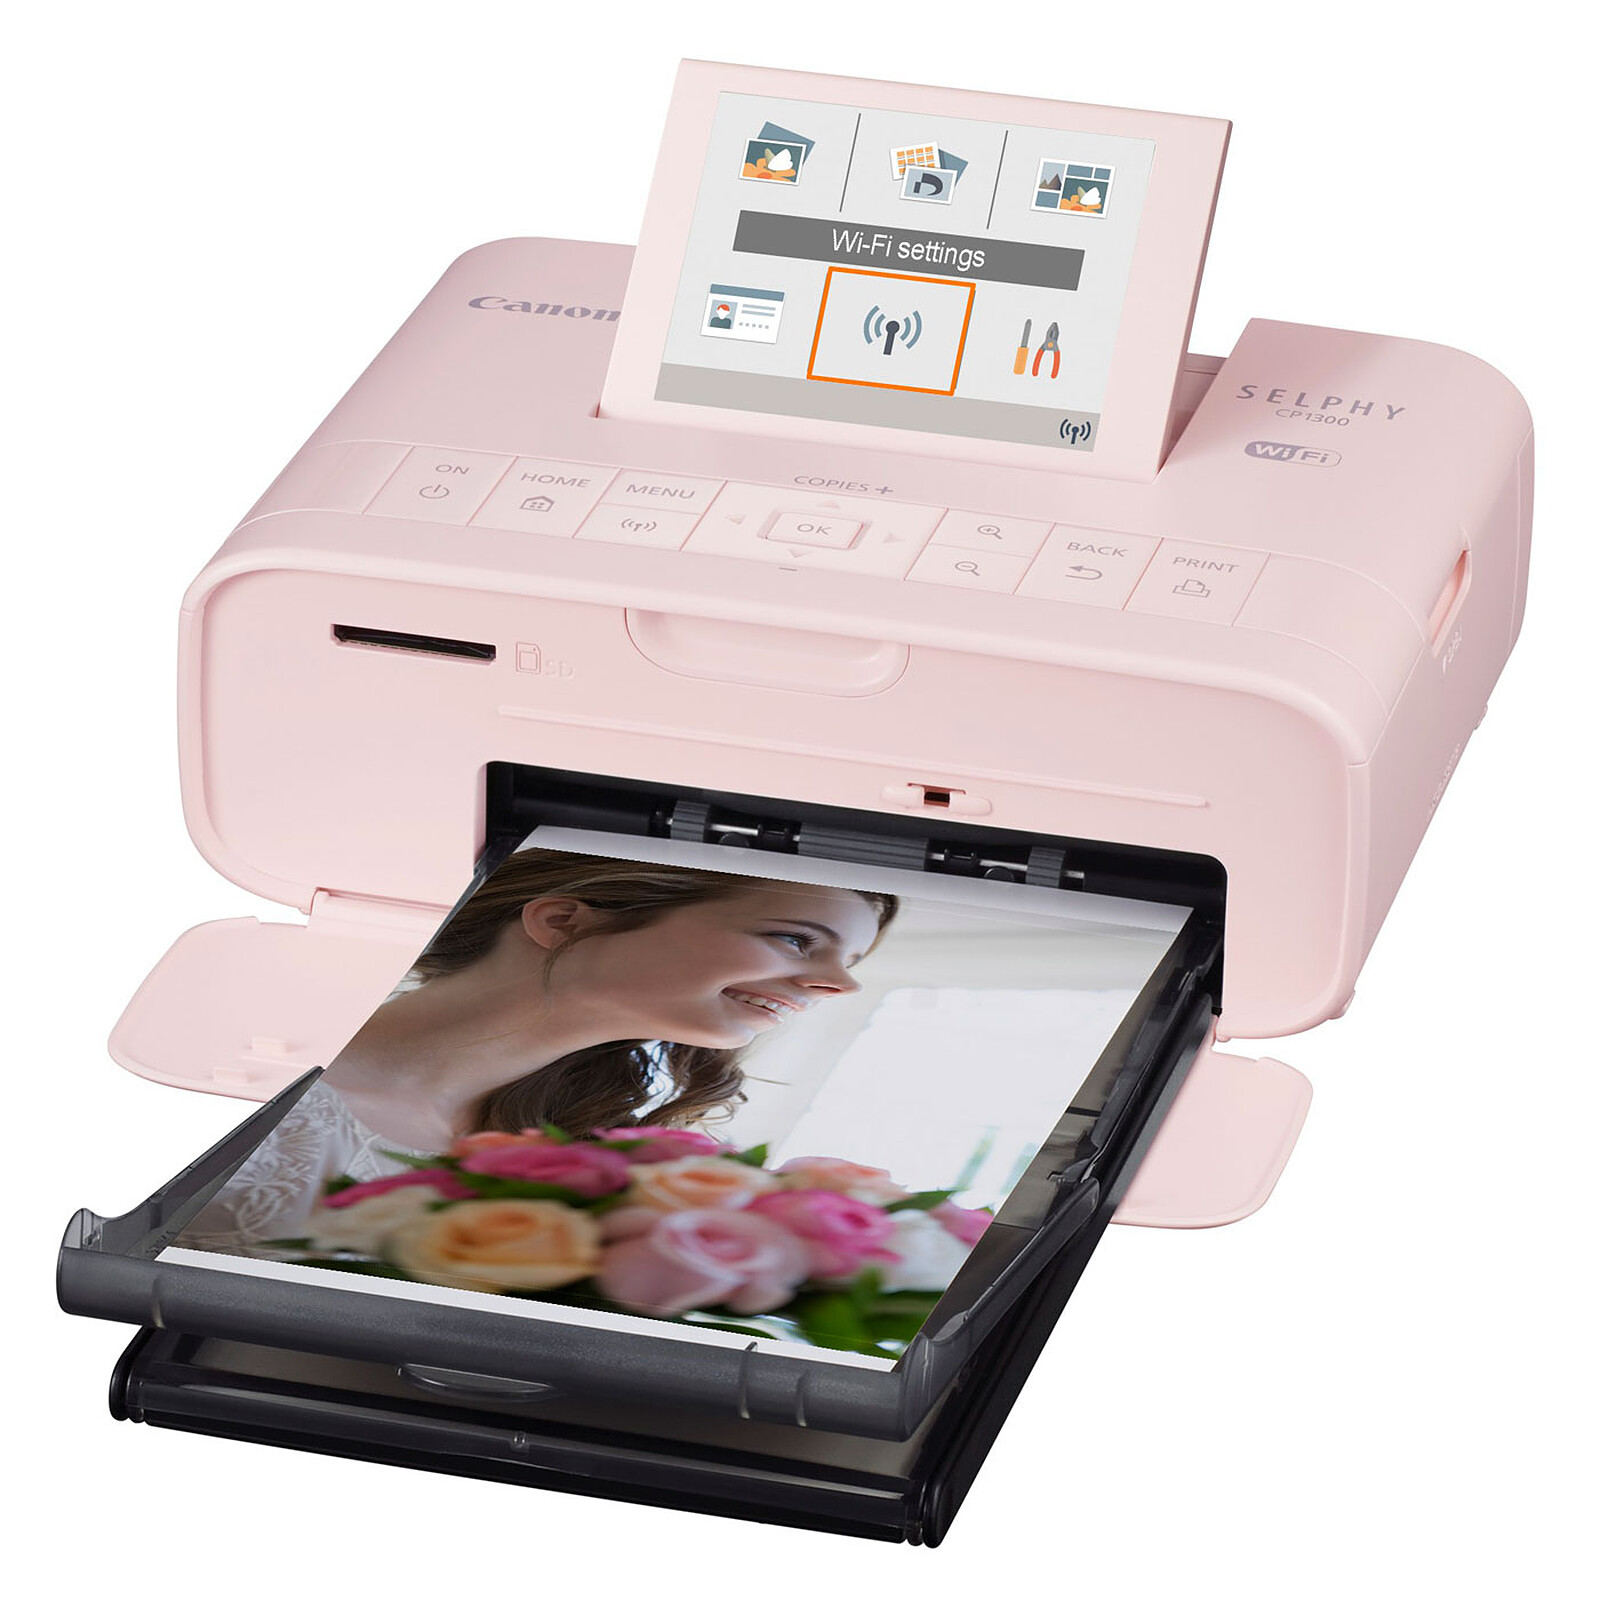 Imprimante photo portable couleur Canon SELPHY CP1500 - Rose